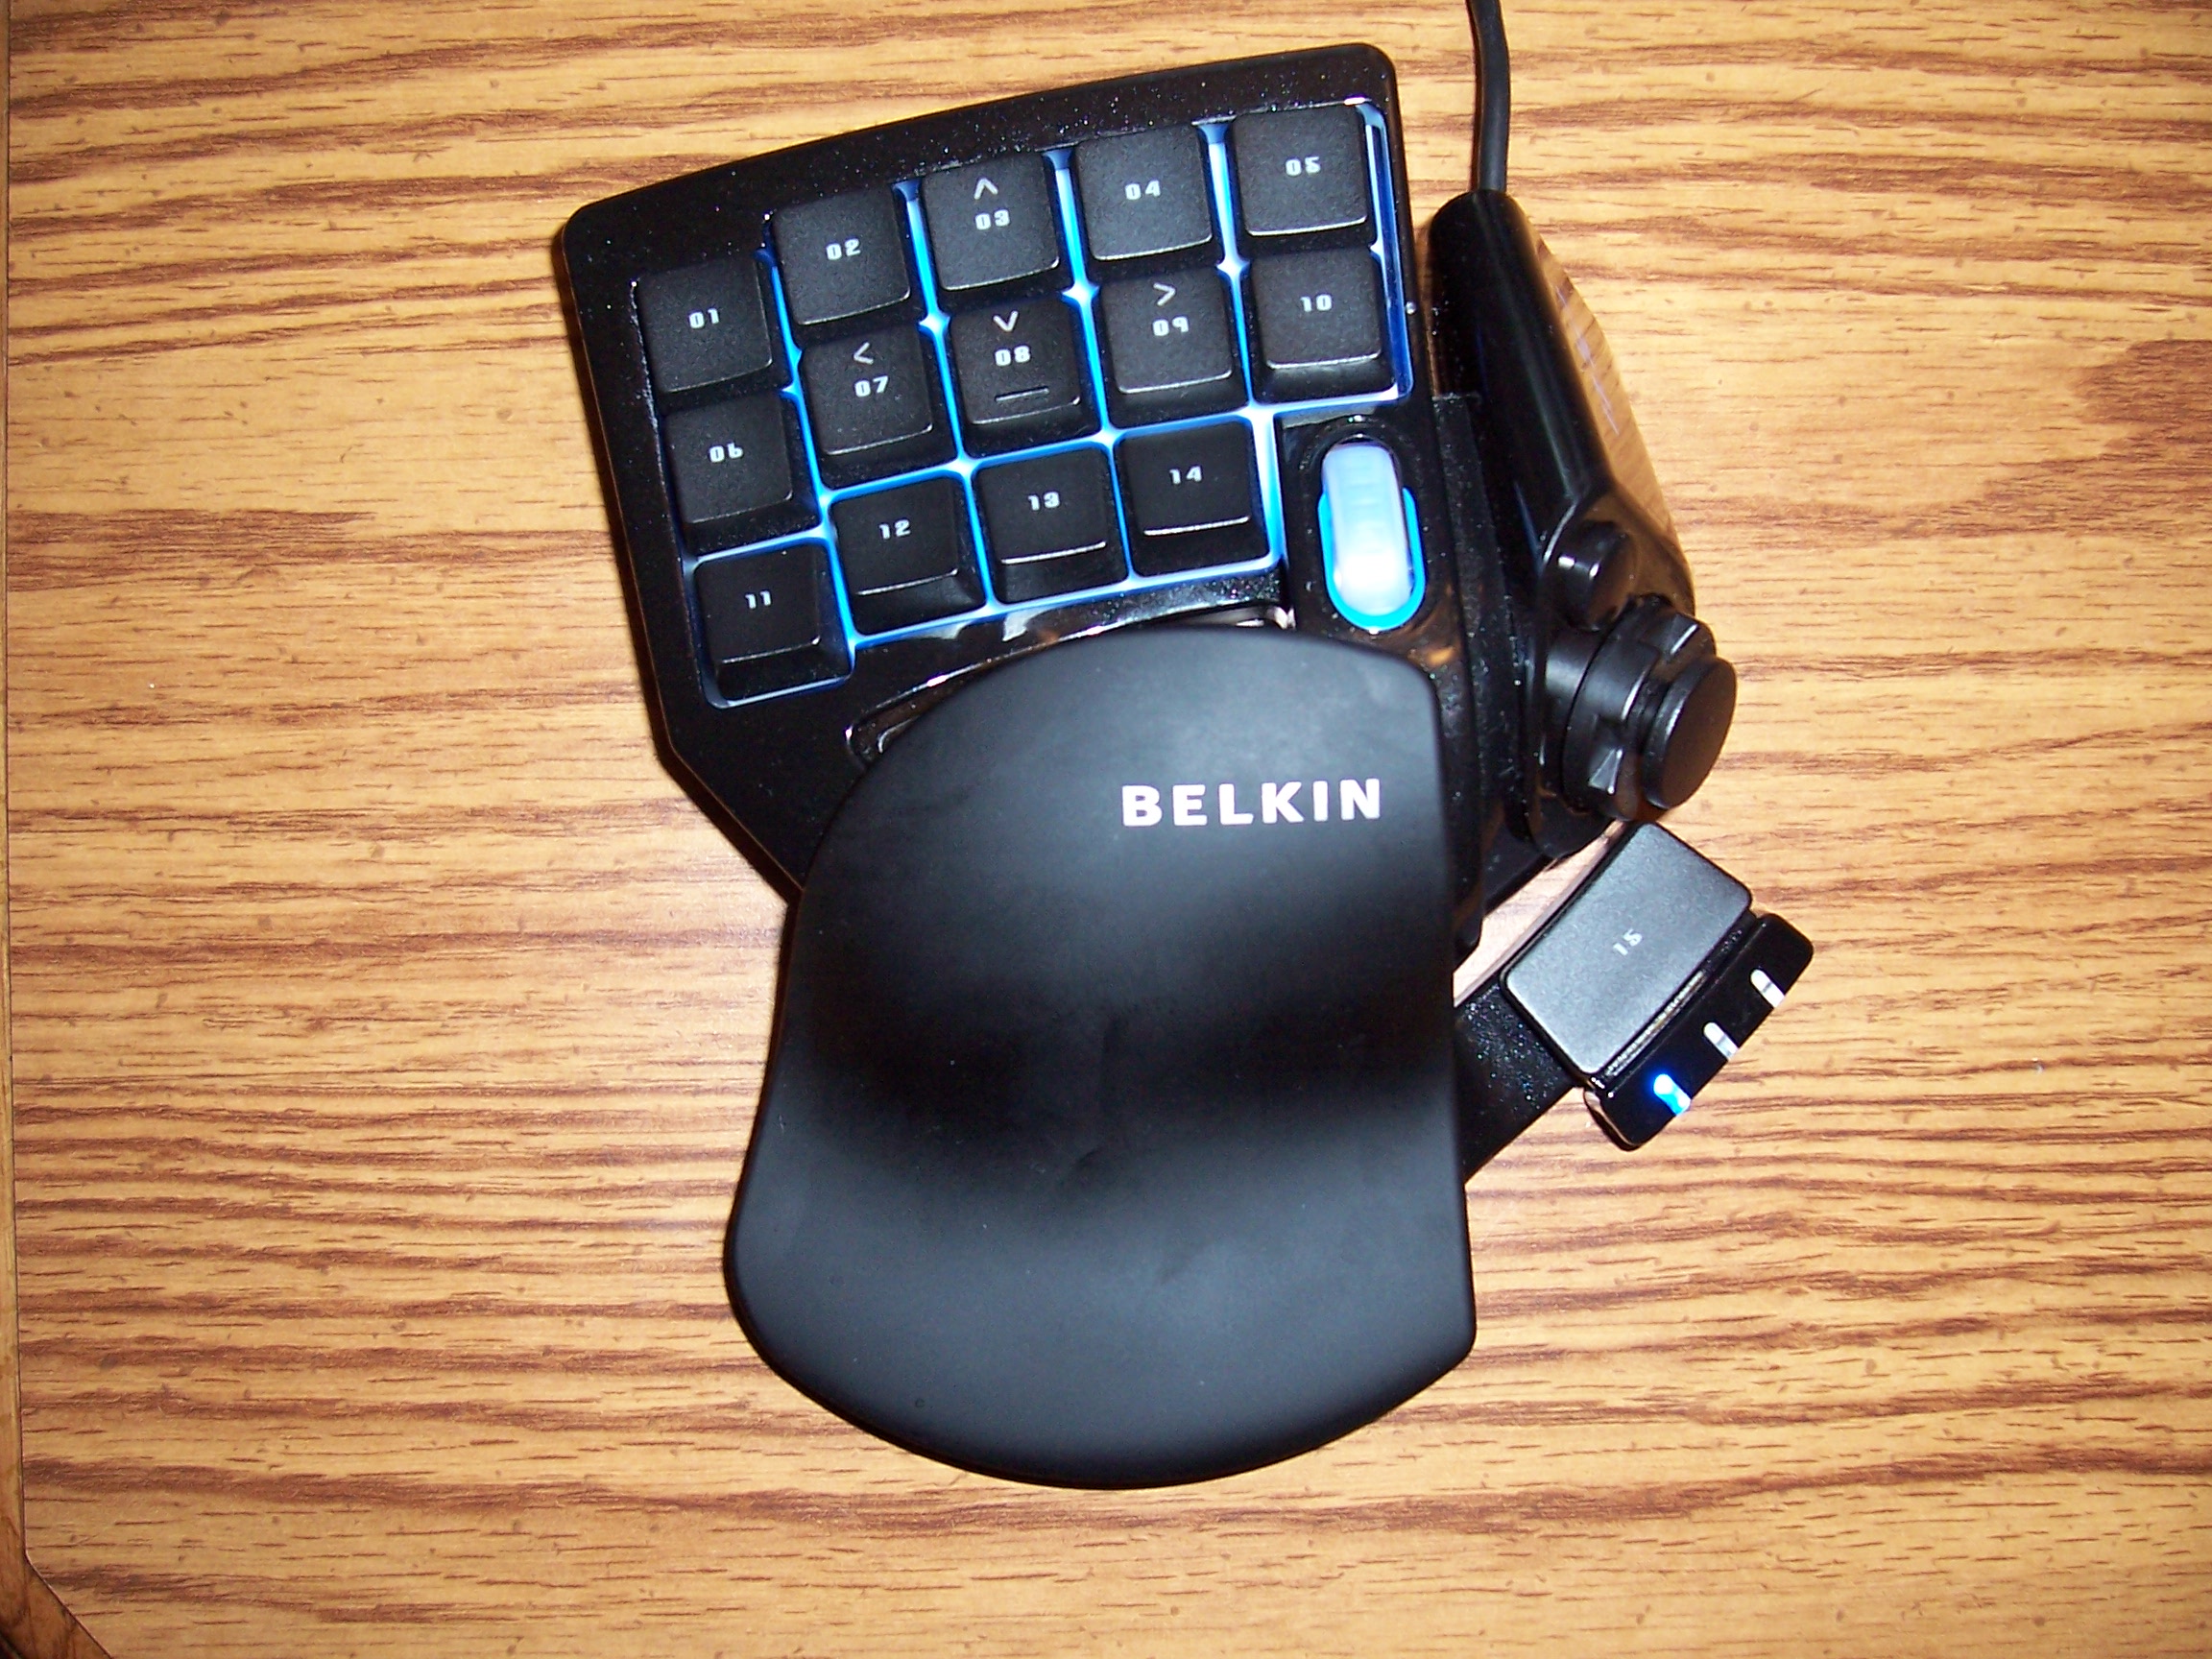 Belkin N52te Driver For Mac